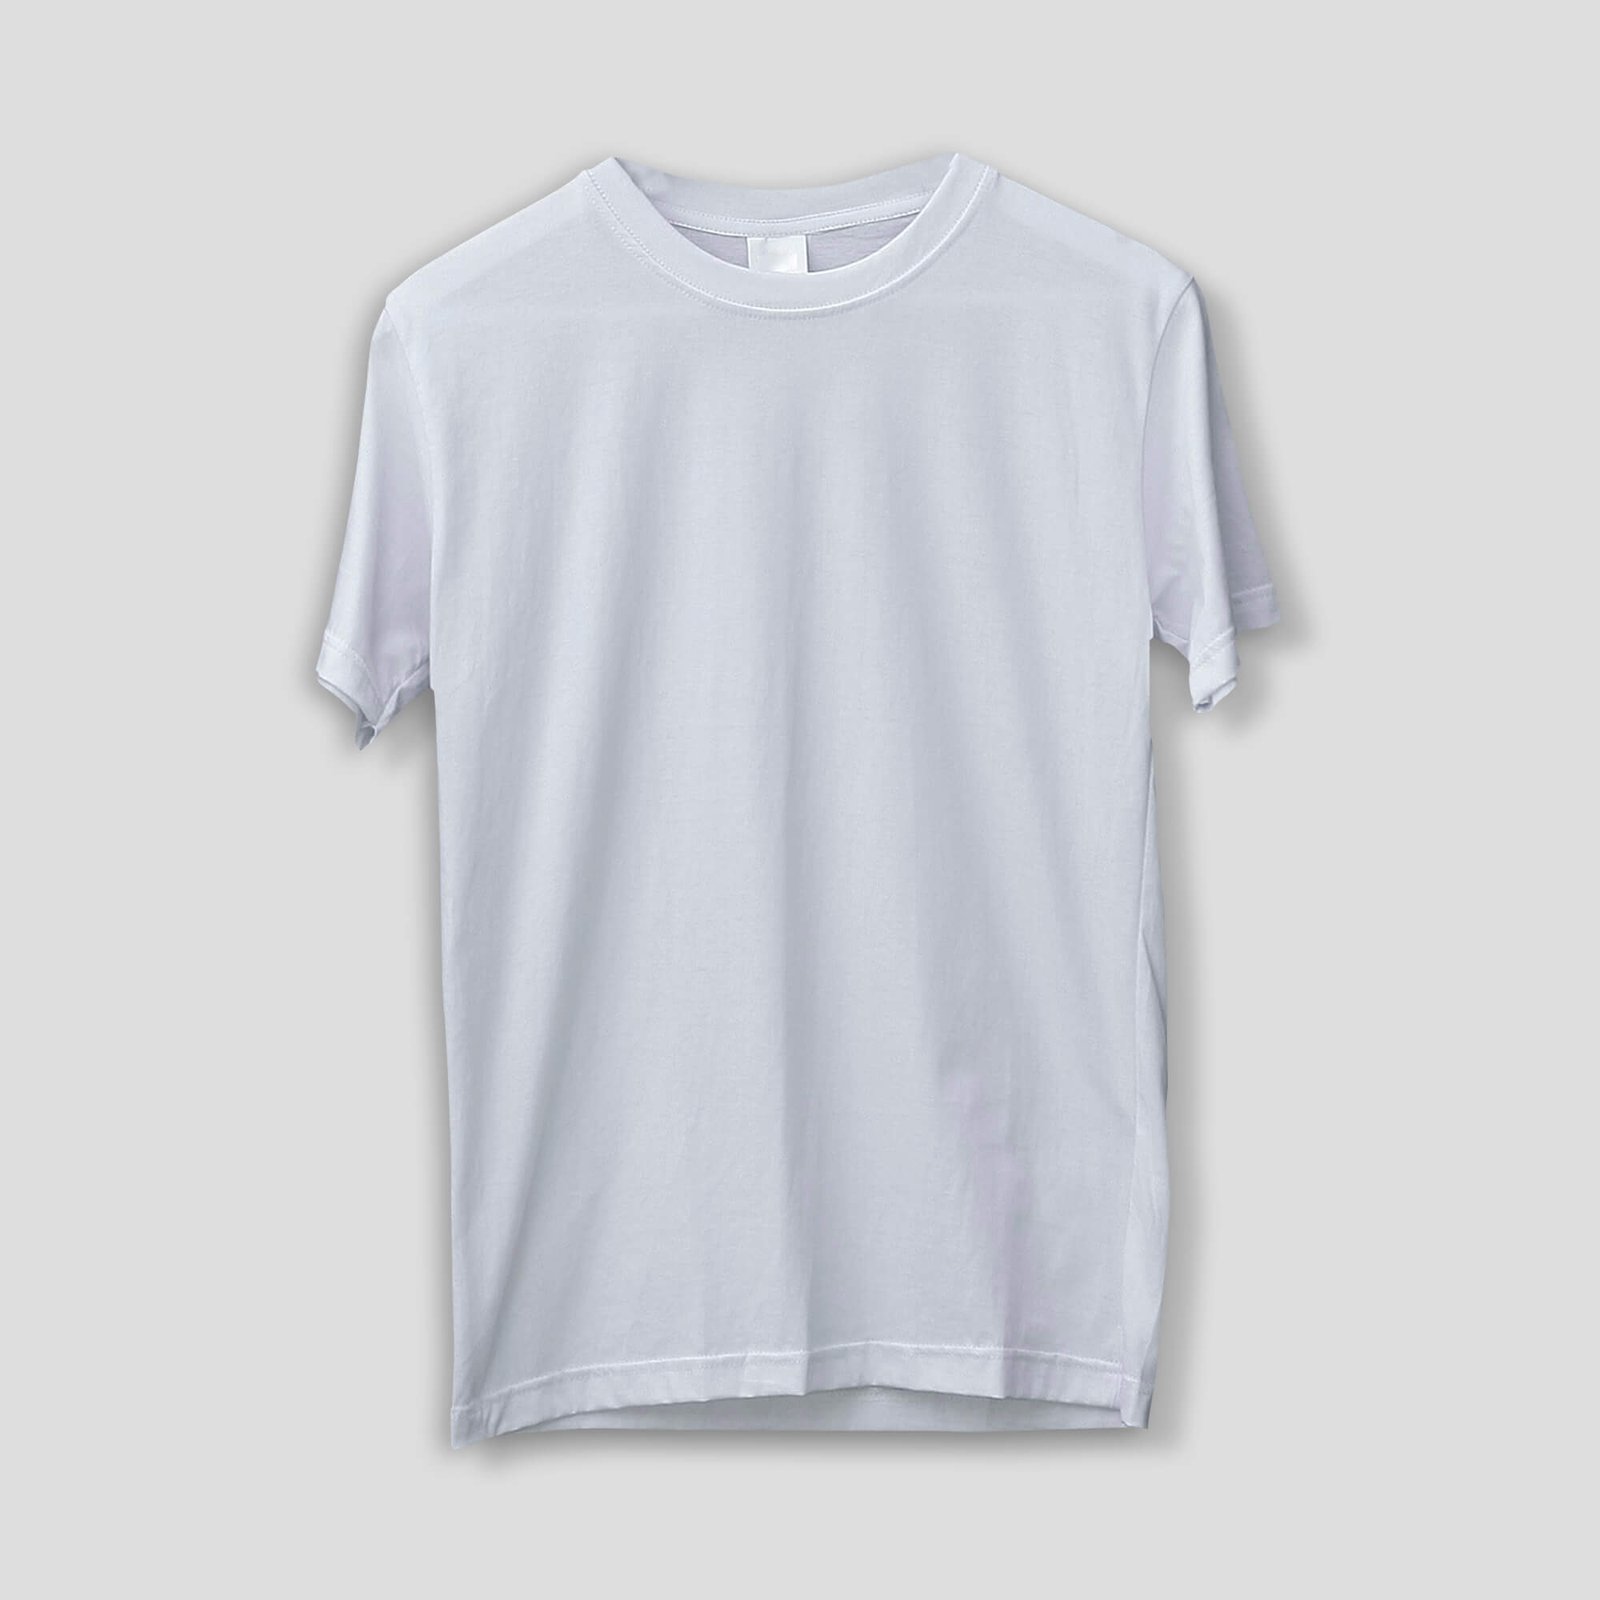 Blank Free Oversize Girl T-Shirt Mockup PSD Template